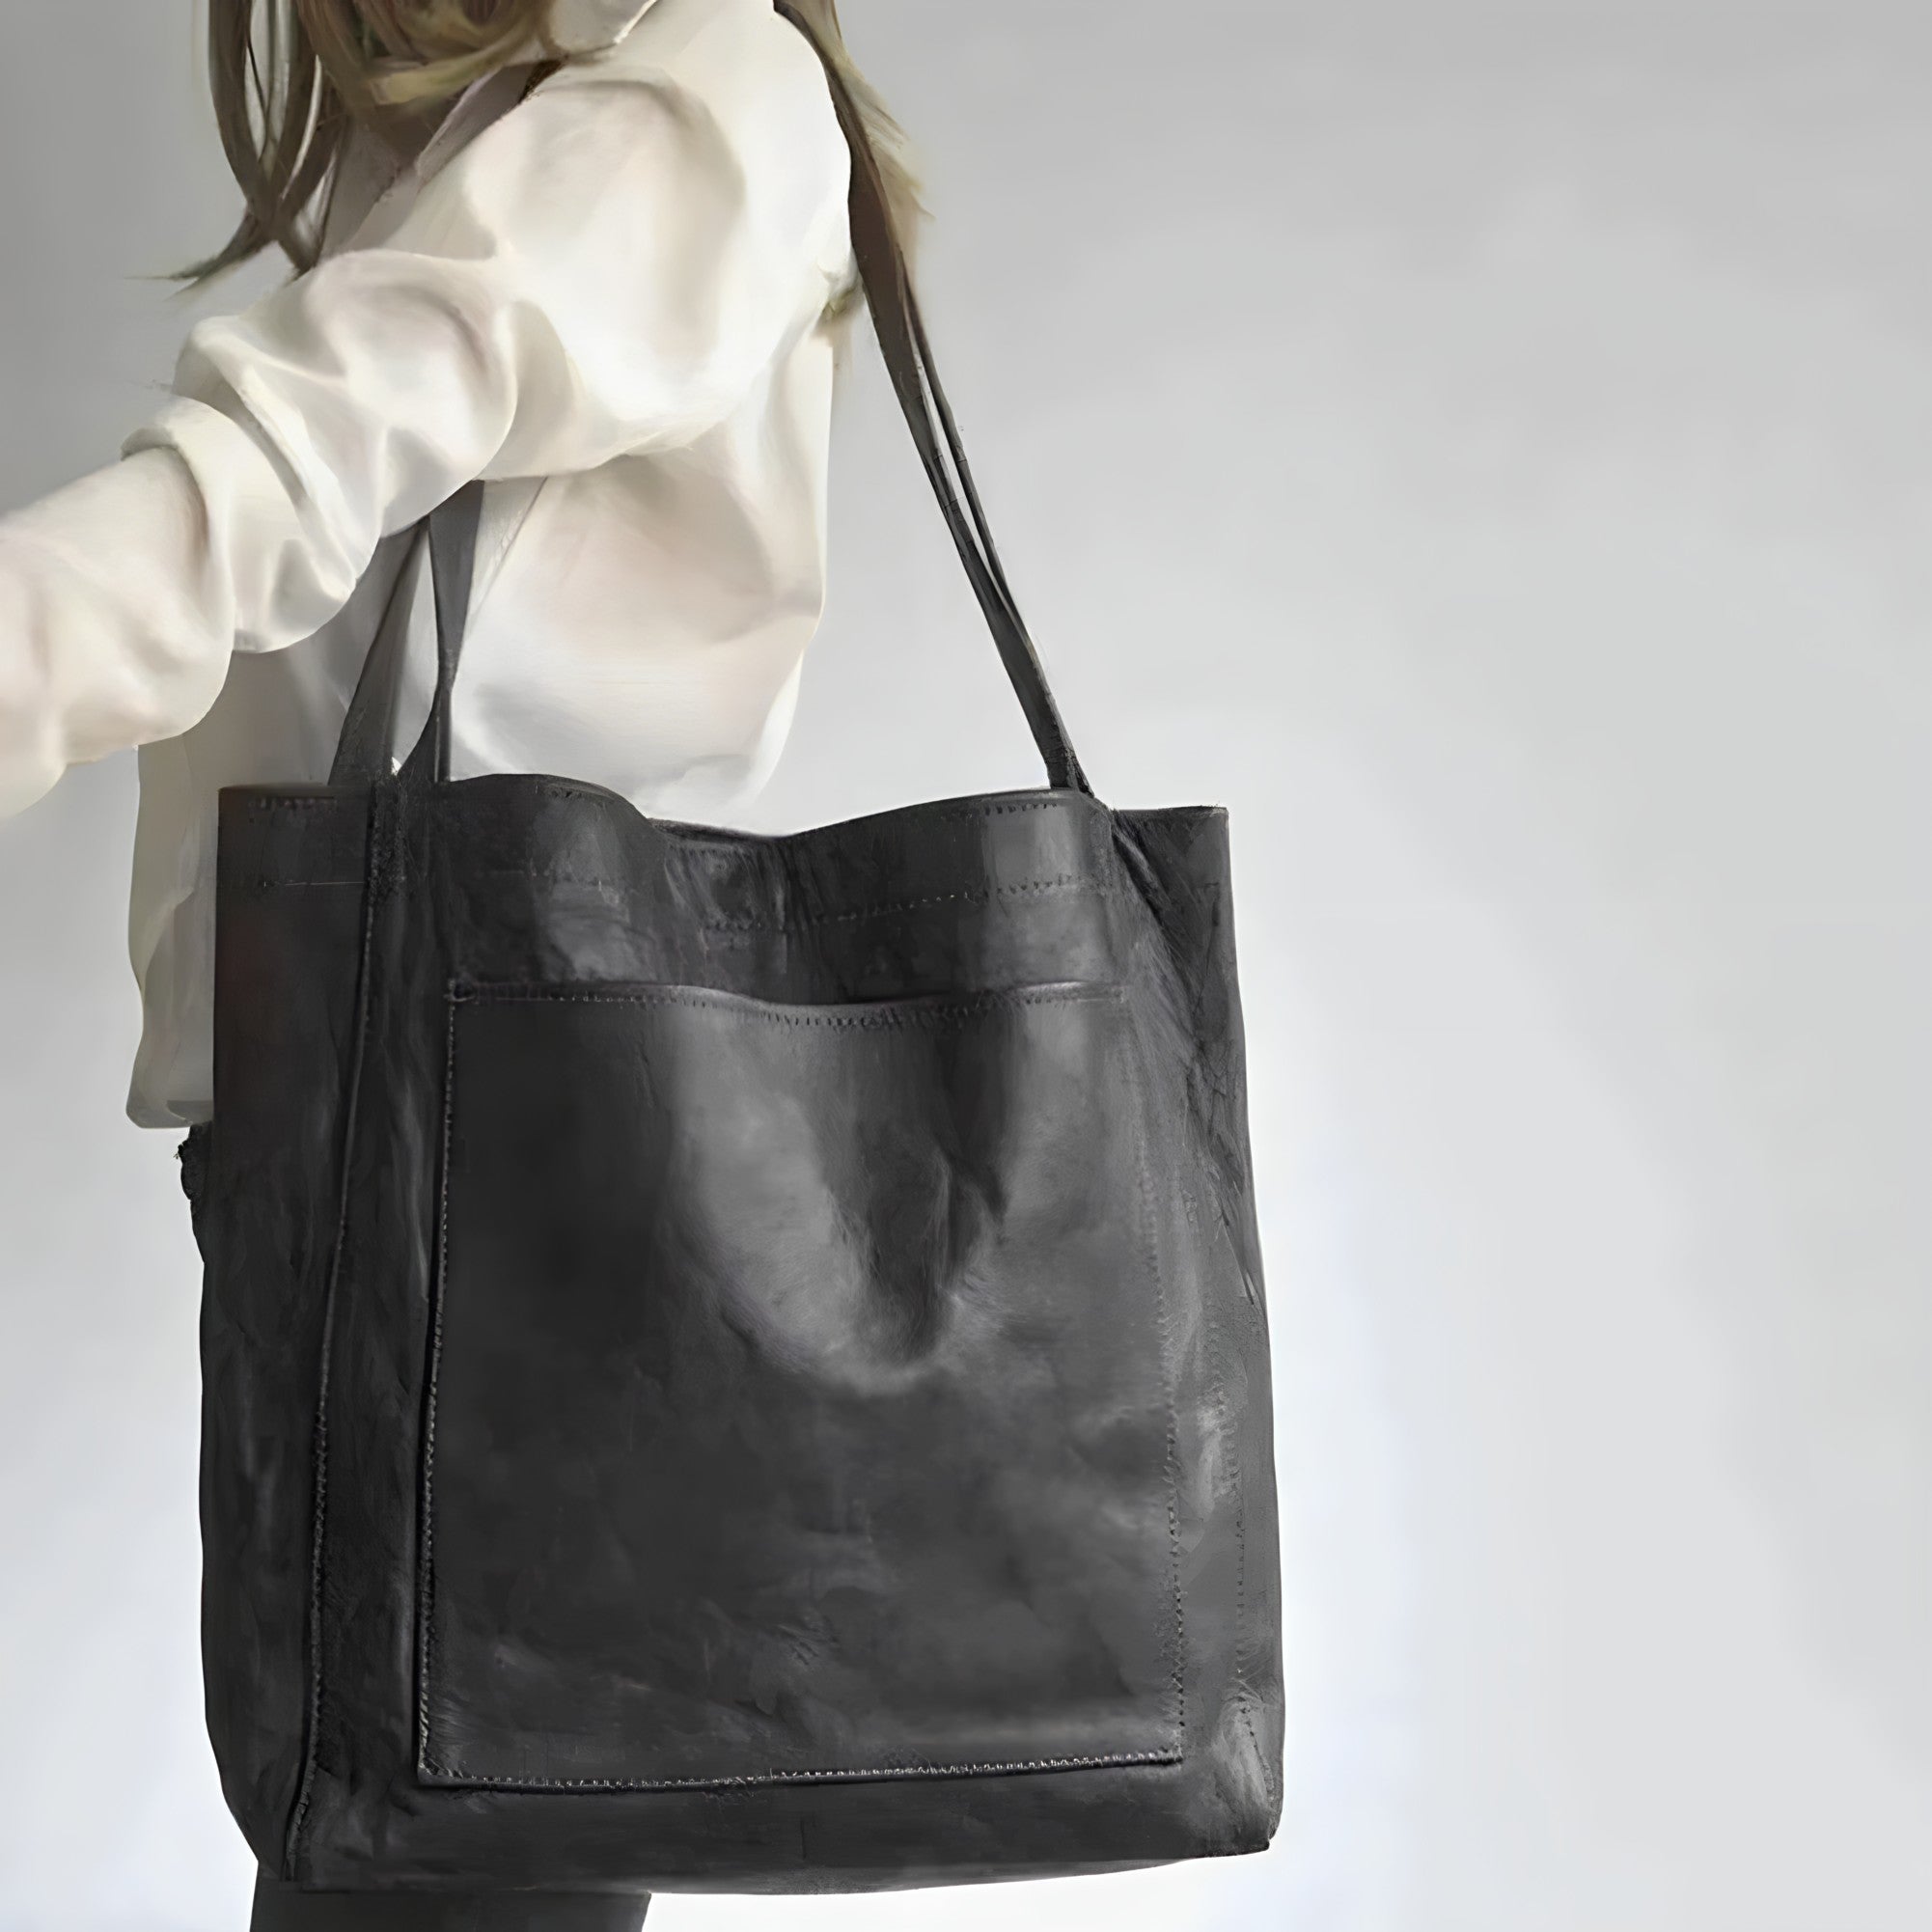 Handmade Stylish Leather Bag